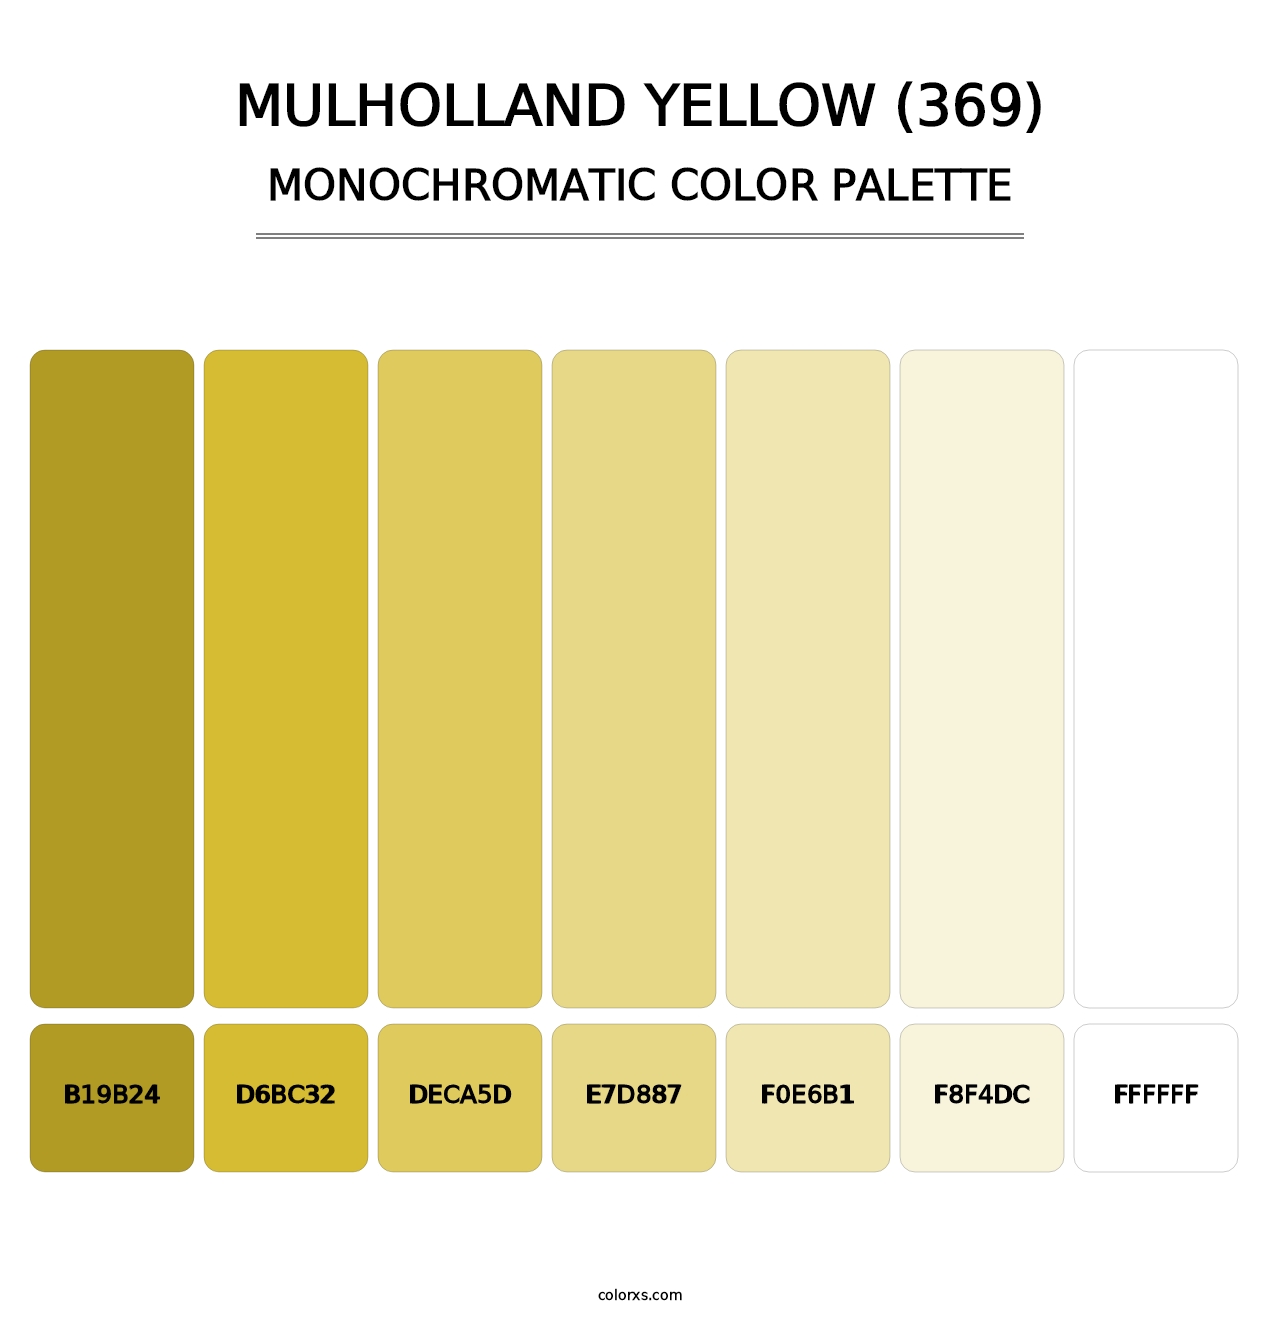 Mulholland Yellow (369) - Monochromatic Color Palette